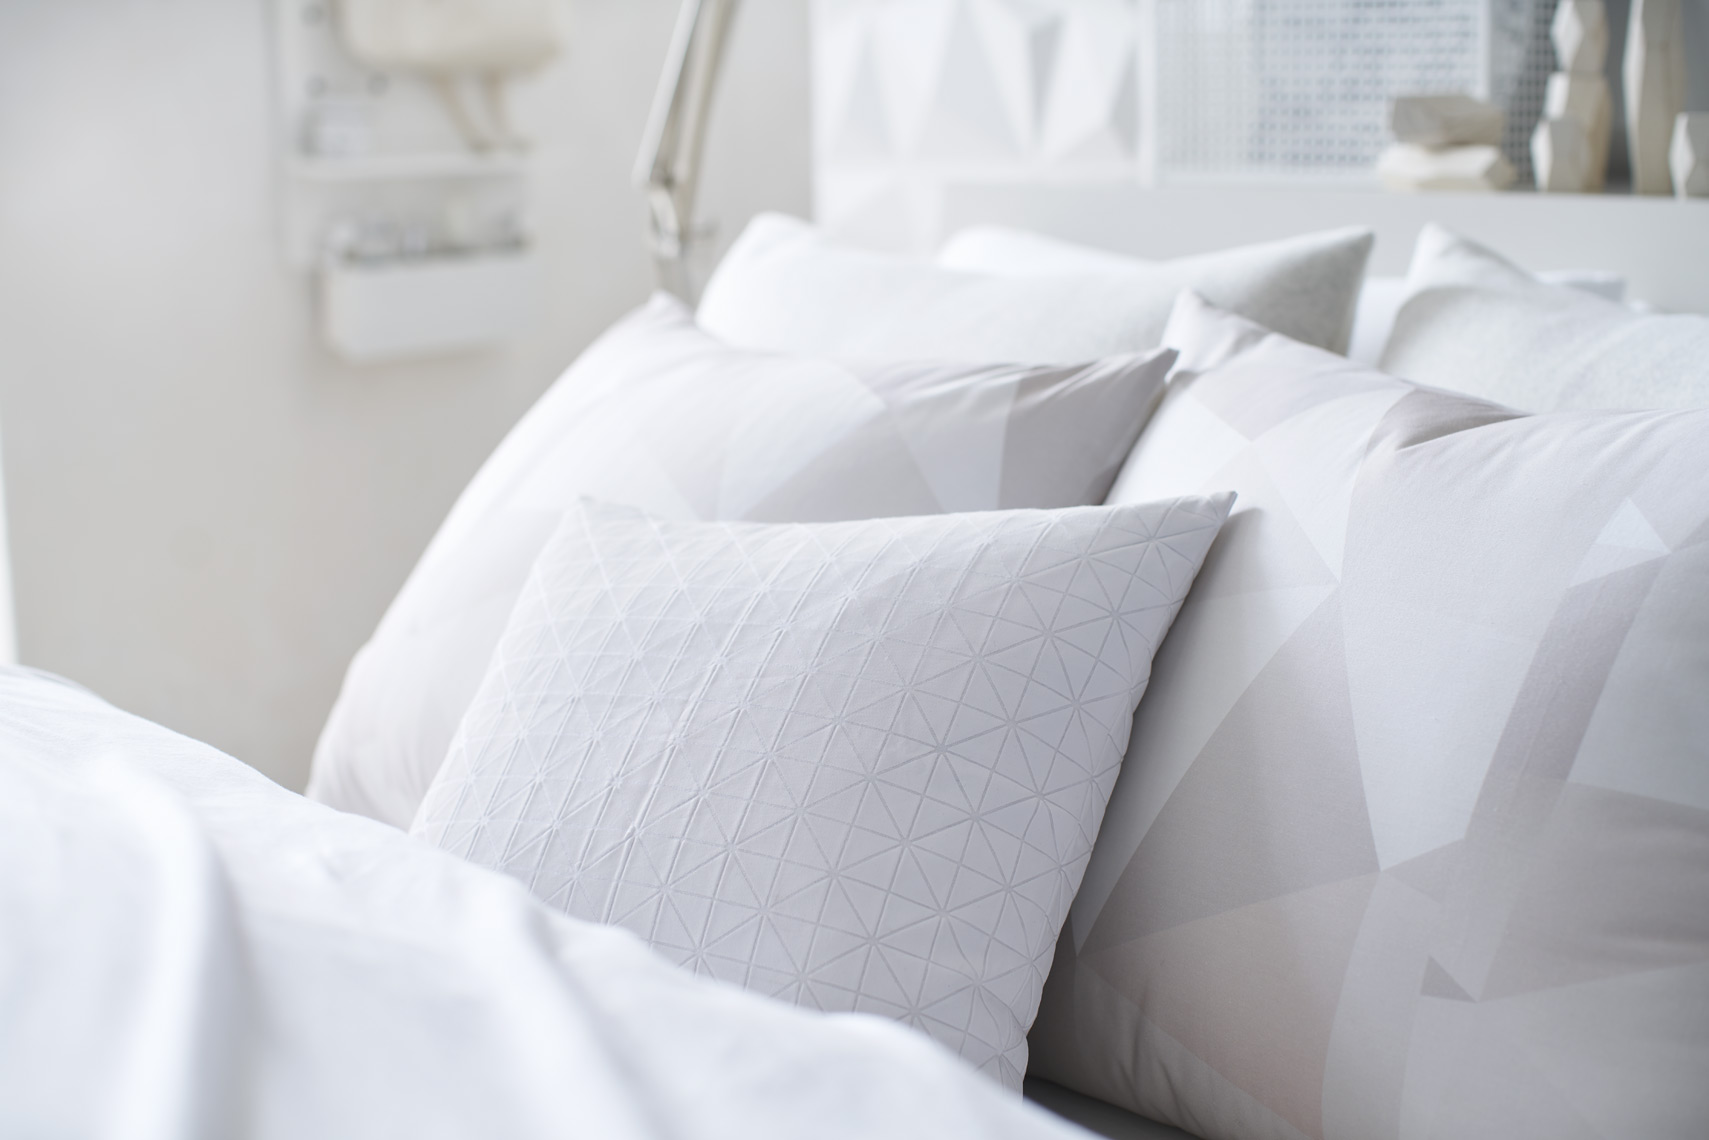 Bedding detail of geometric pattern decorative pillows